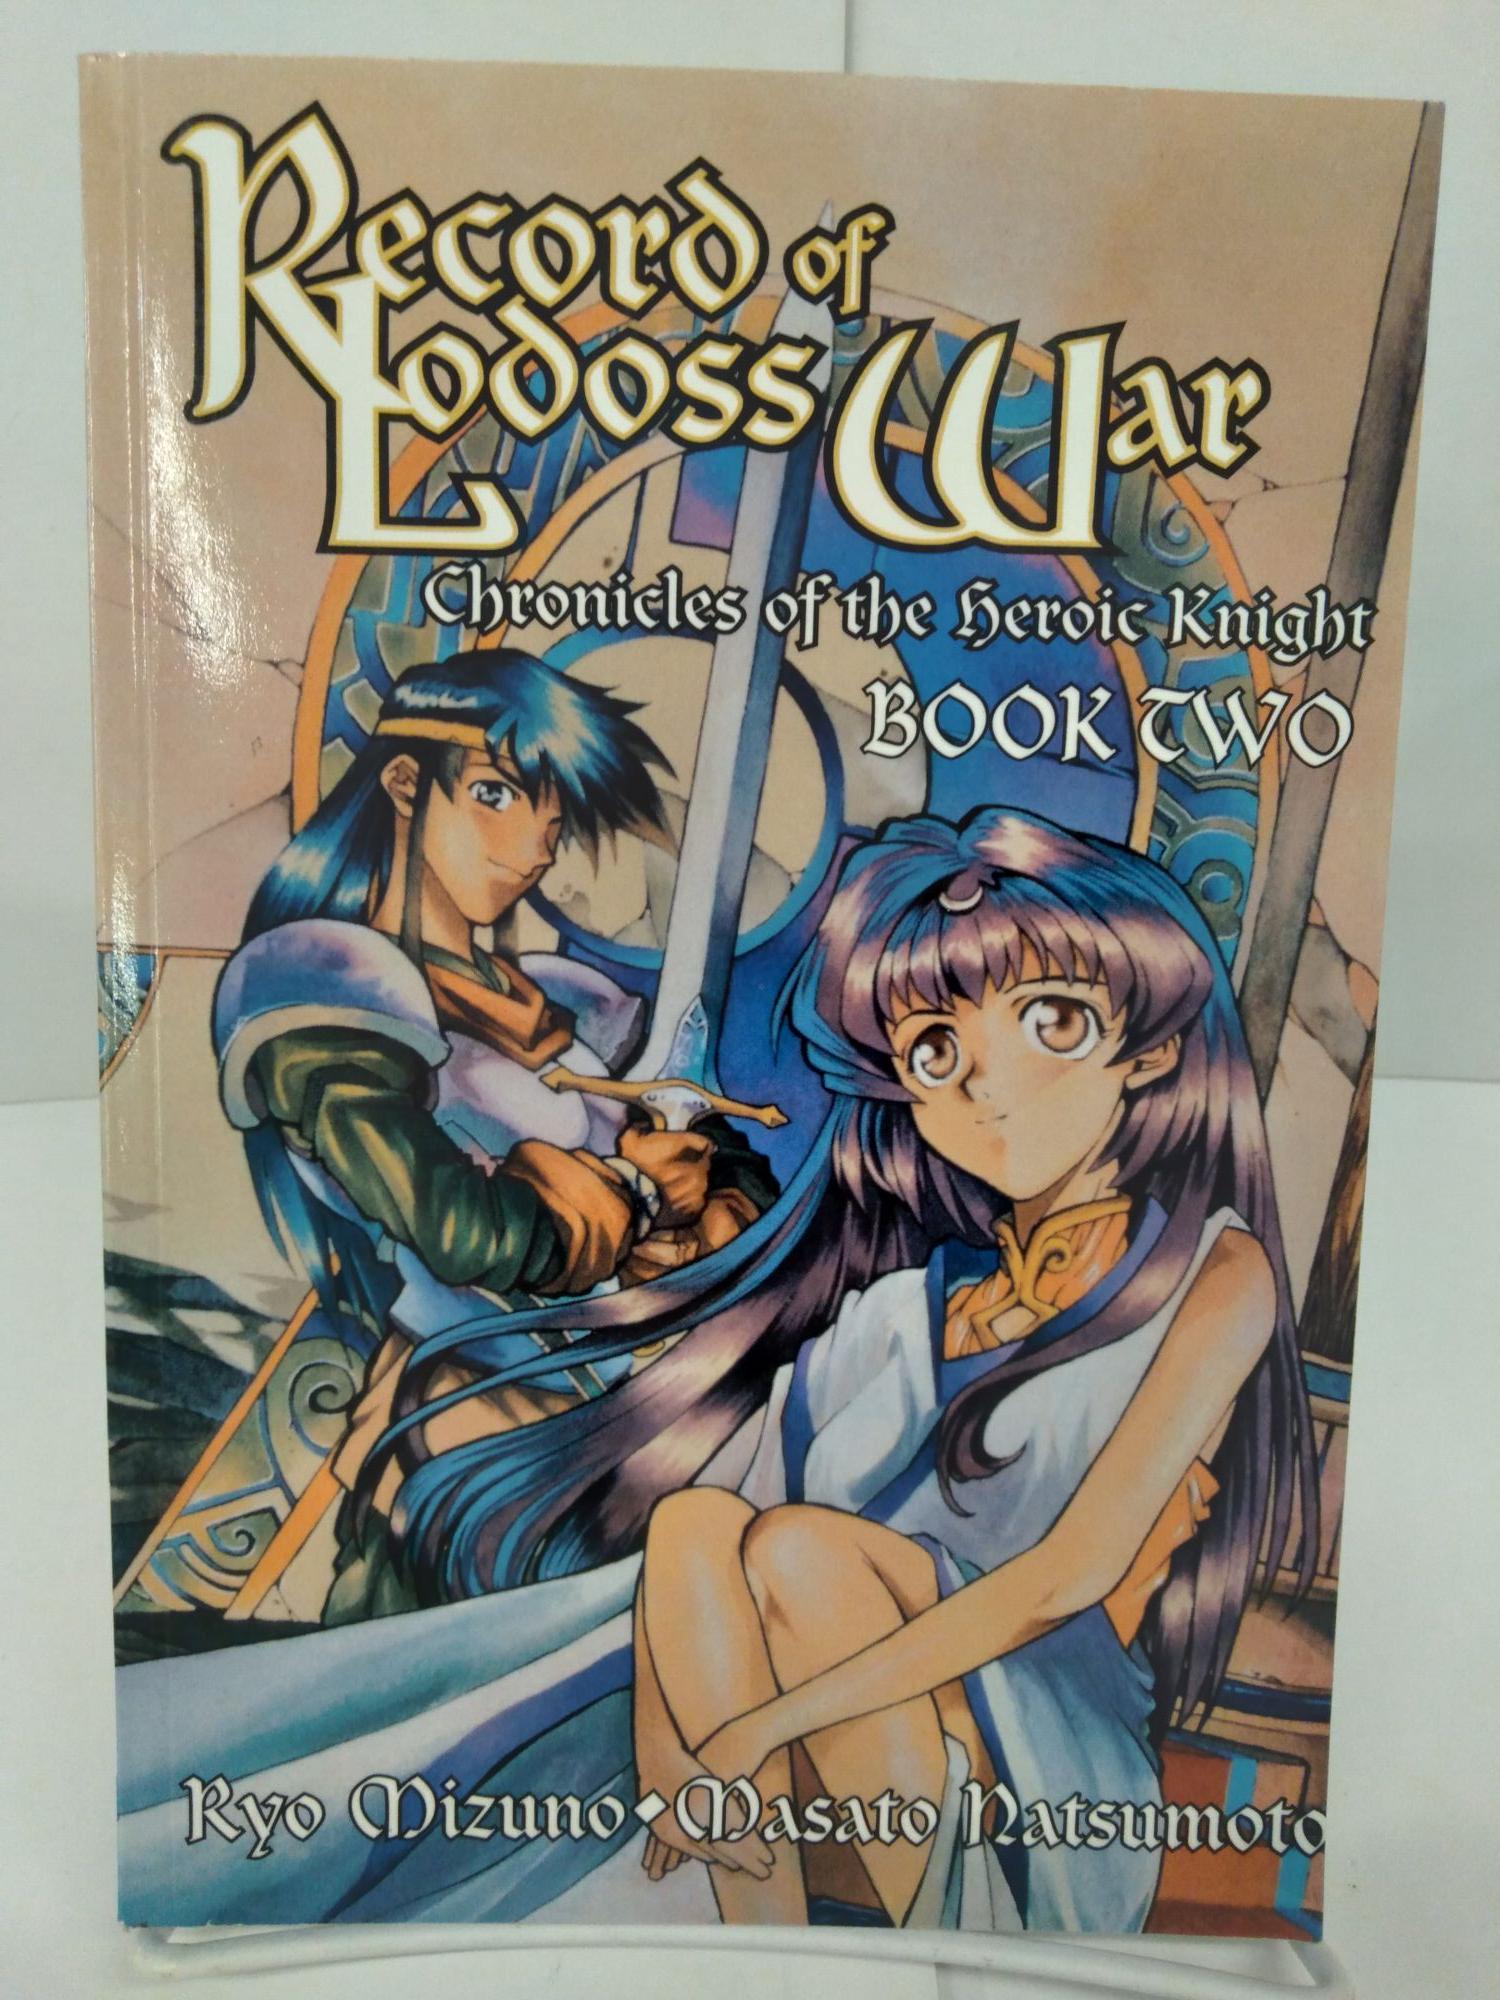 Record Of Lodoss War: Chronicles of the Heroic Knight, Book 2, Ryo Mizuno